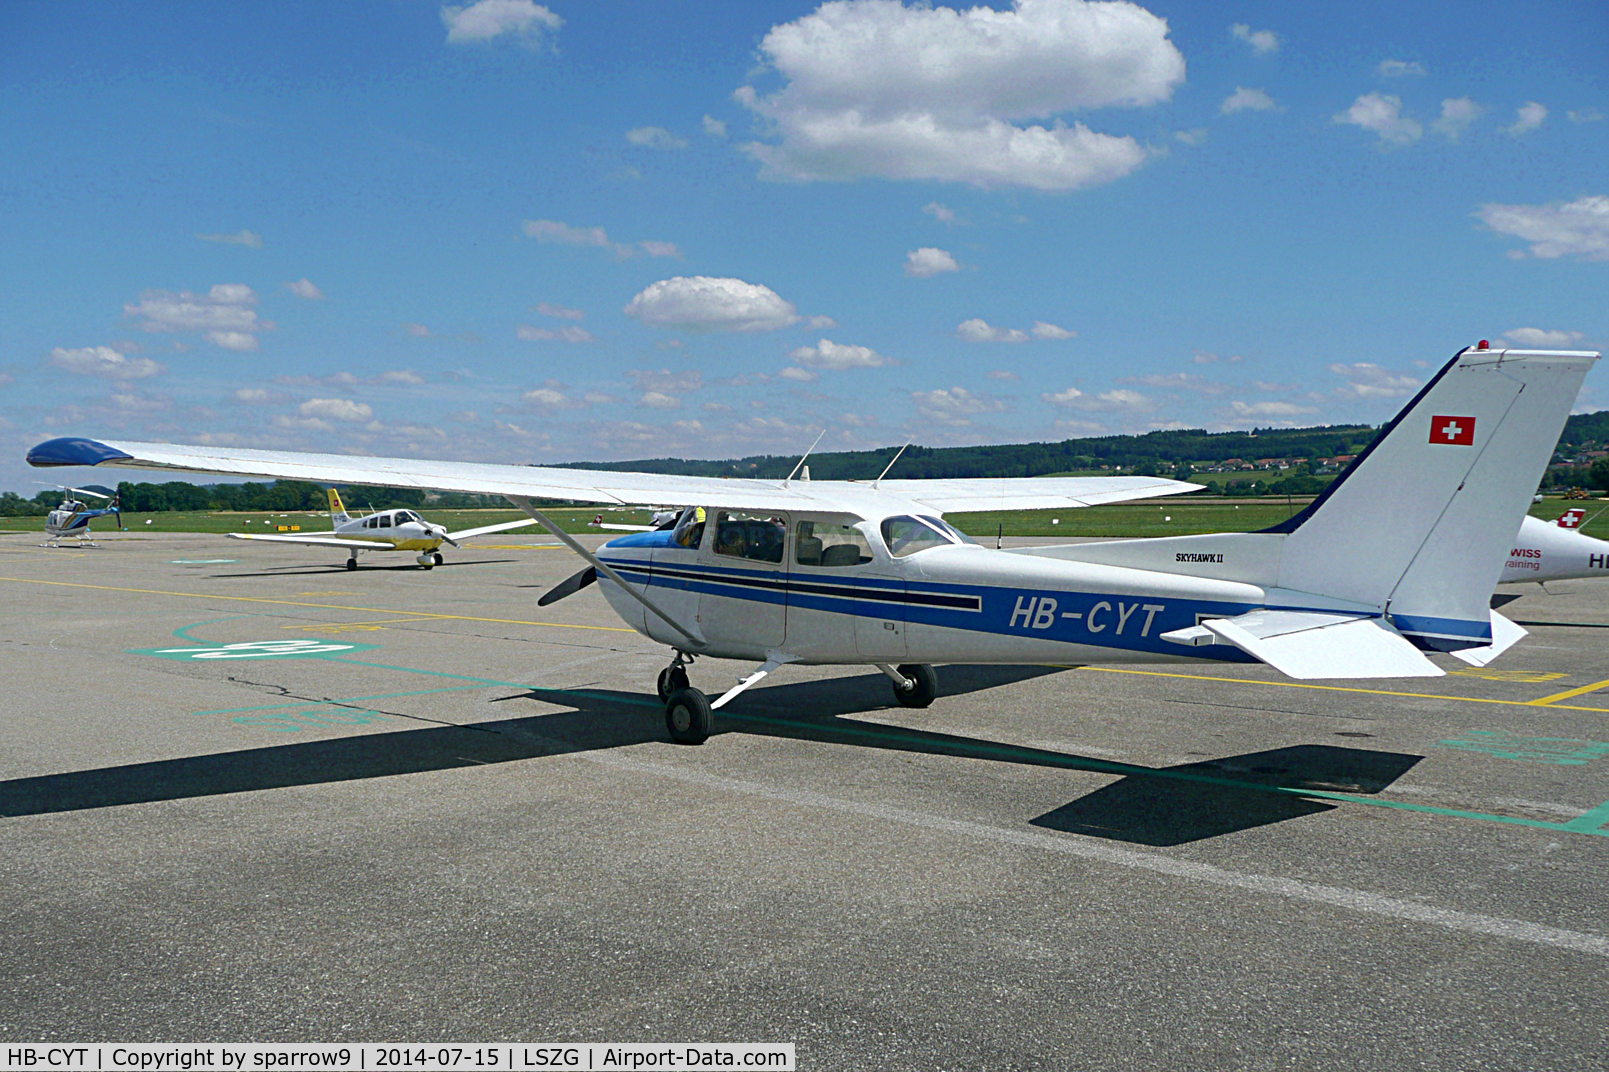 HB-CYT, 1974 Reims F172M Skyhawk Skyhawk C/N 1192, A rare guest here